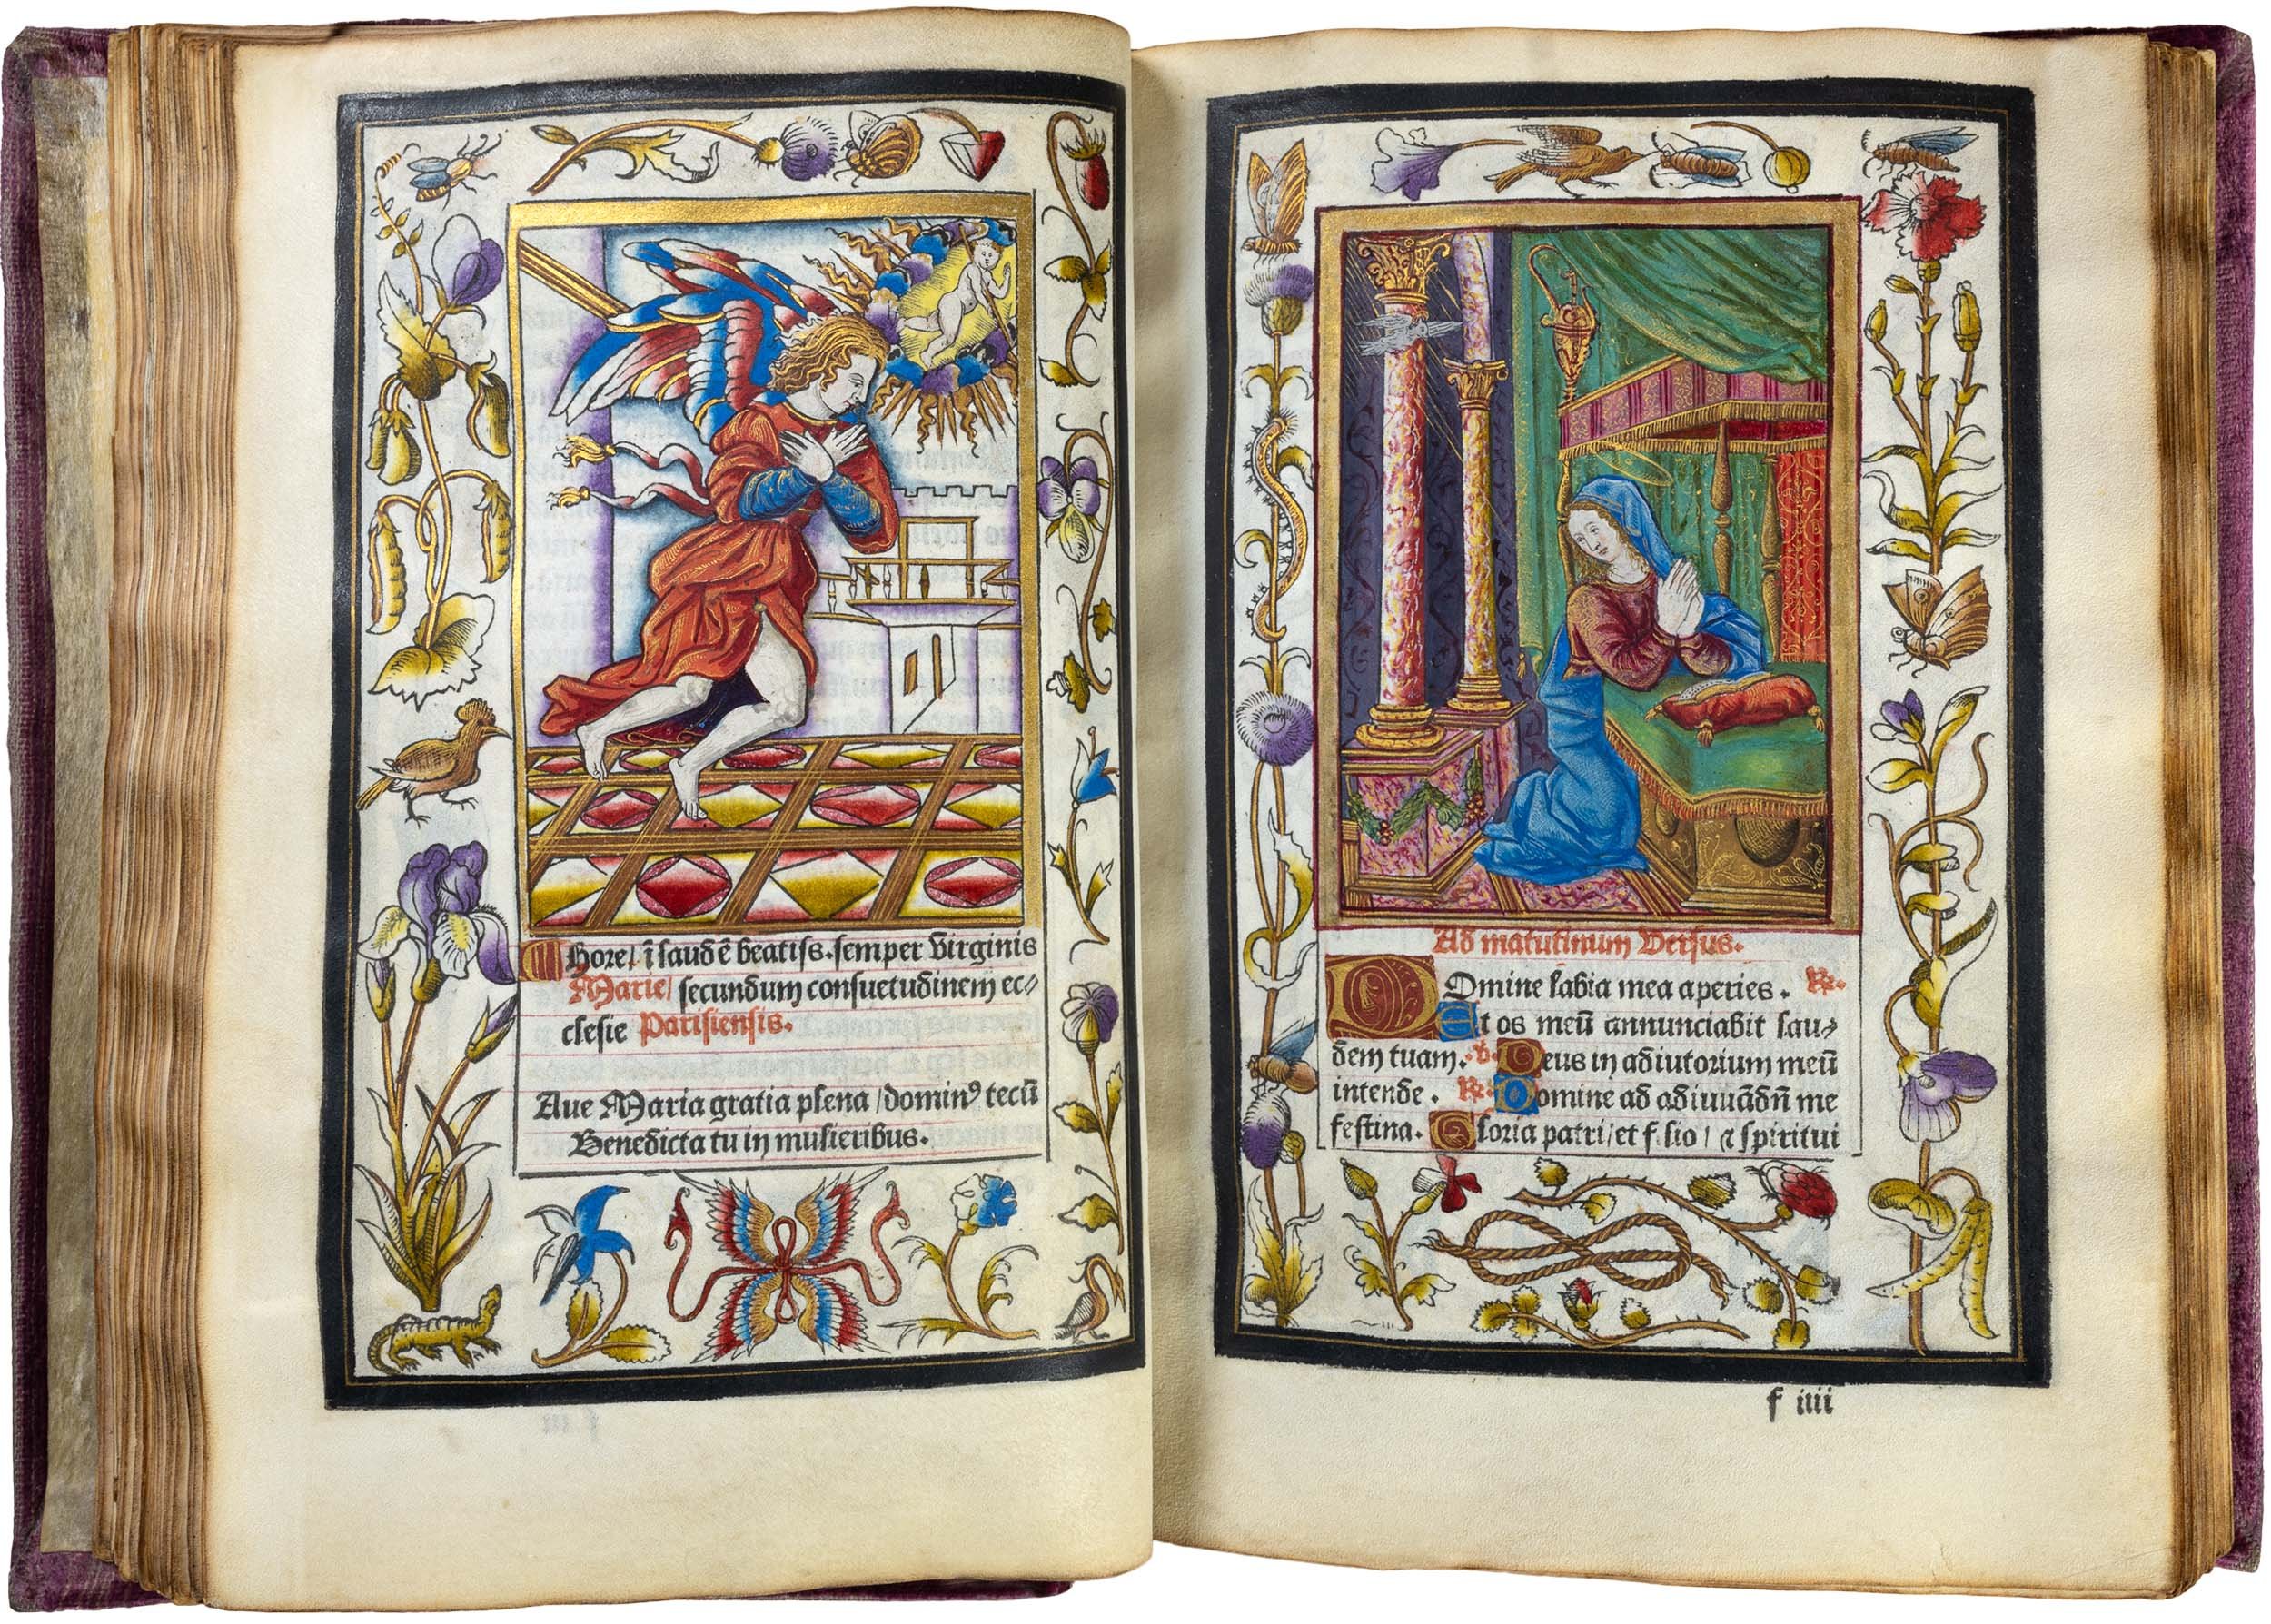 geoffroy-tory-printed-book-of-hours-illuminated-vellum-22-october-1527-prince-dessing-villeneuve-horae-bmv-46.jpg